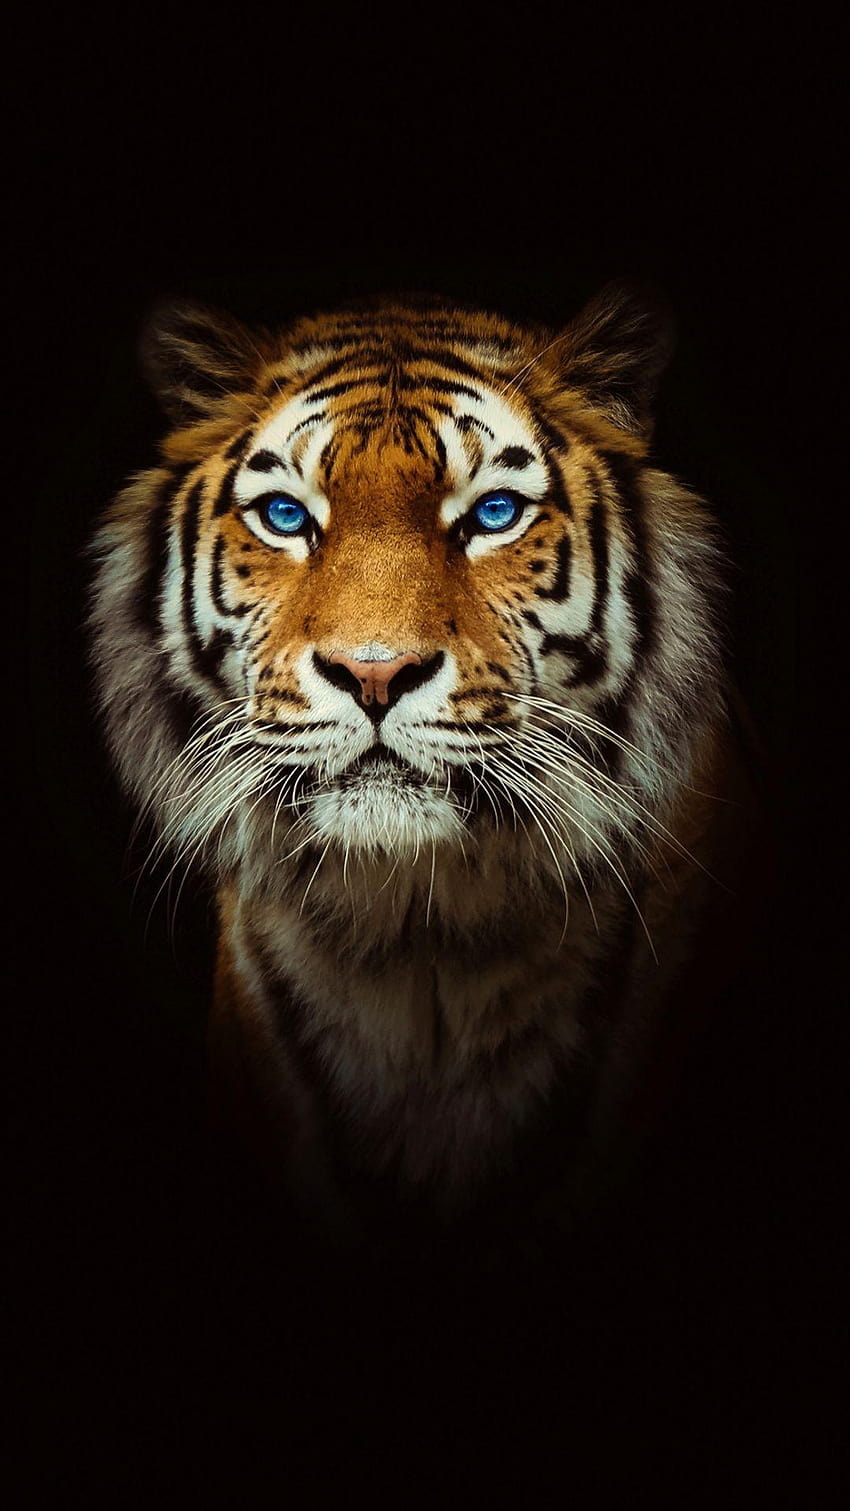 iPhone tigre, olhos de tigre com raiva Papel de parede de celular HD